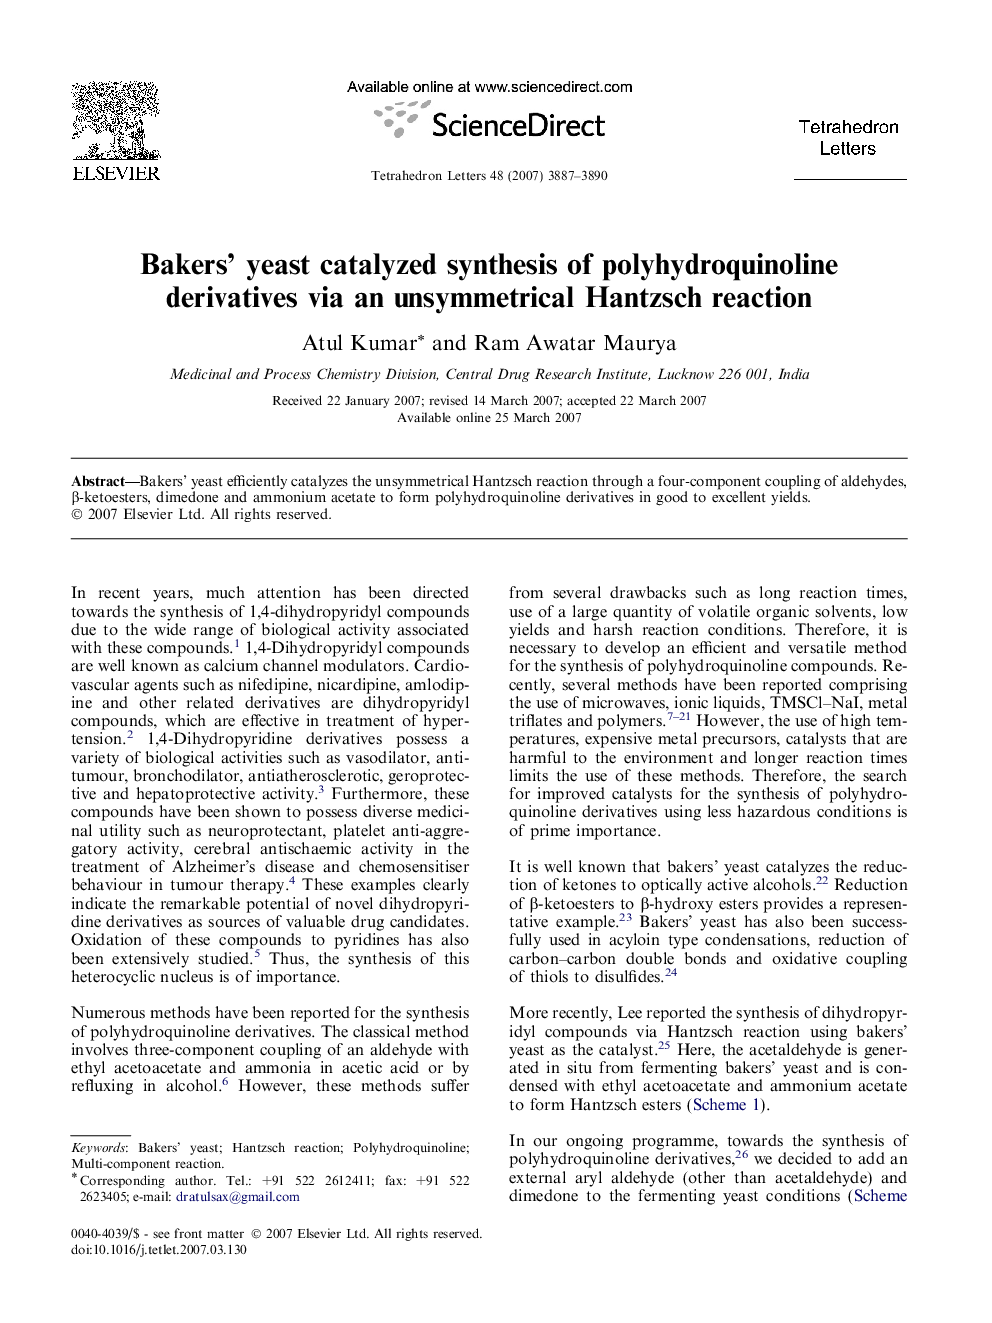 Bakers' yeast catalyzed synthesis of polyhydroquinoline derivatives via an unsymmetrical Hantzsch reaction